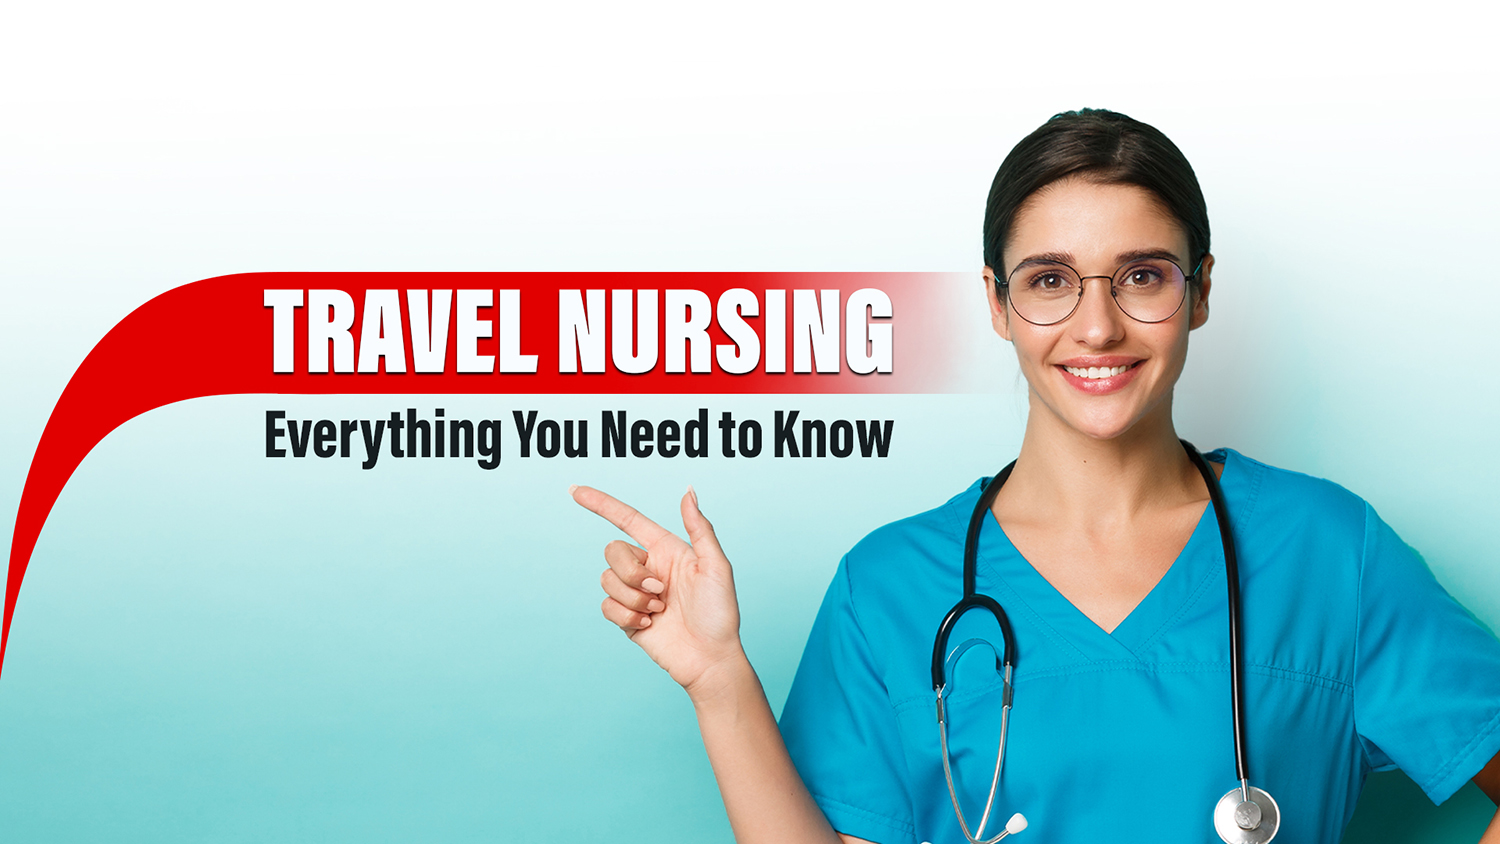 Travel Nursing: Everything You Need to Know